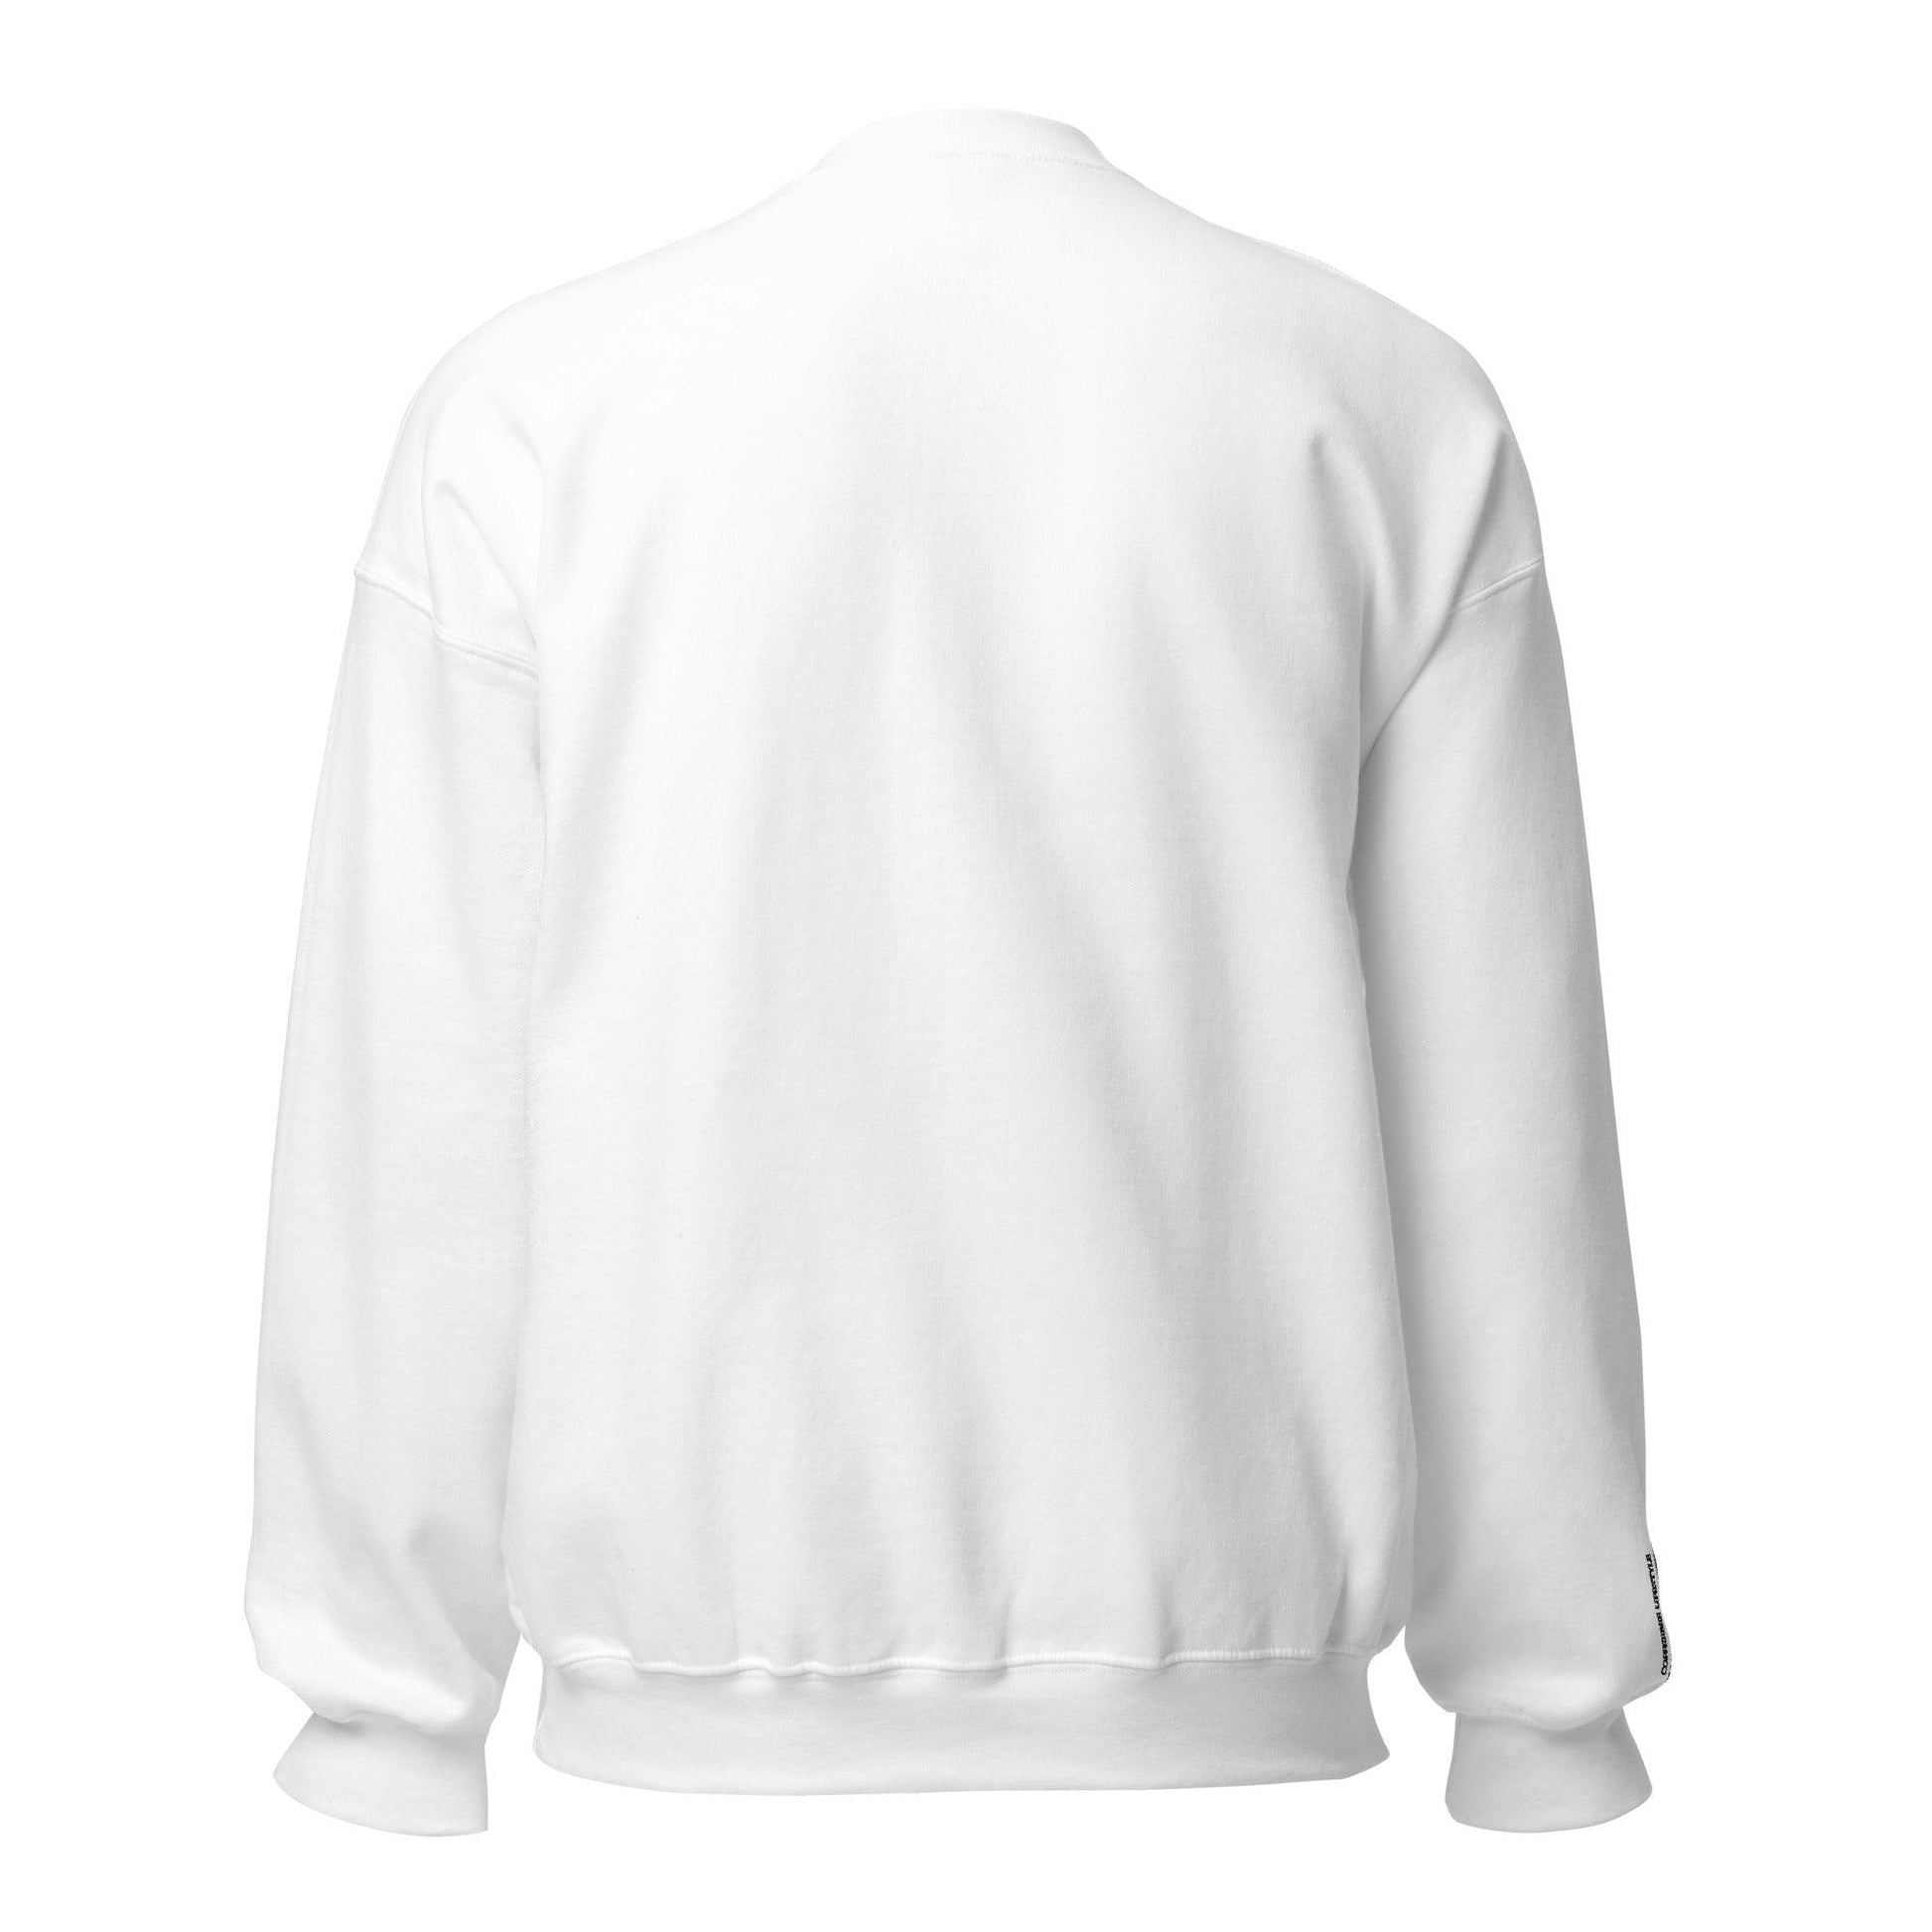 Unisex Embroidery Crew Neck Sweatshirt - COFFEEBRE